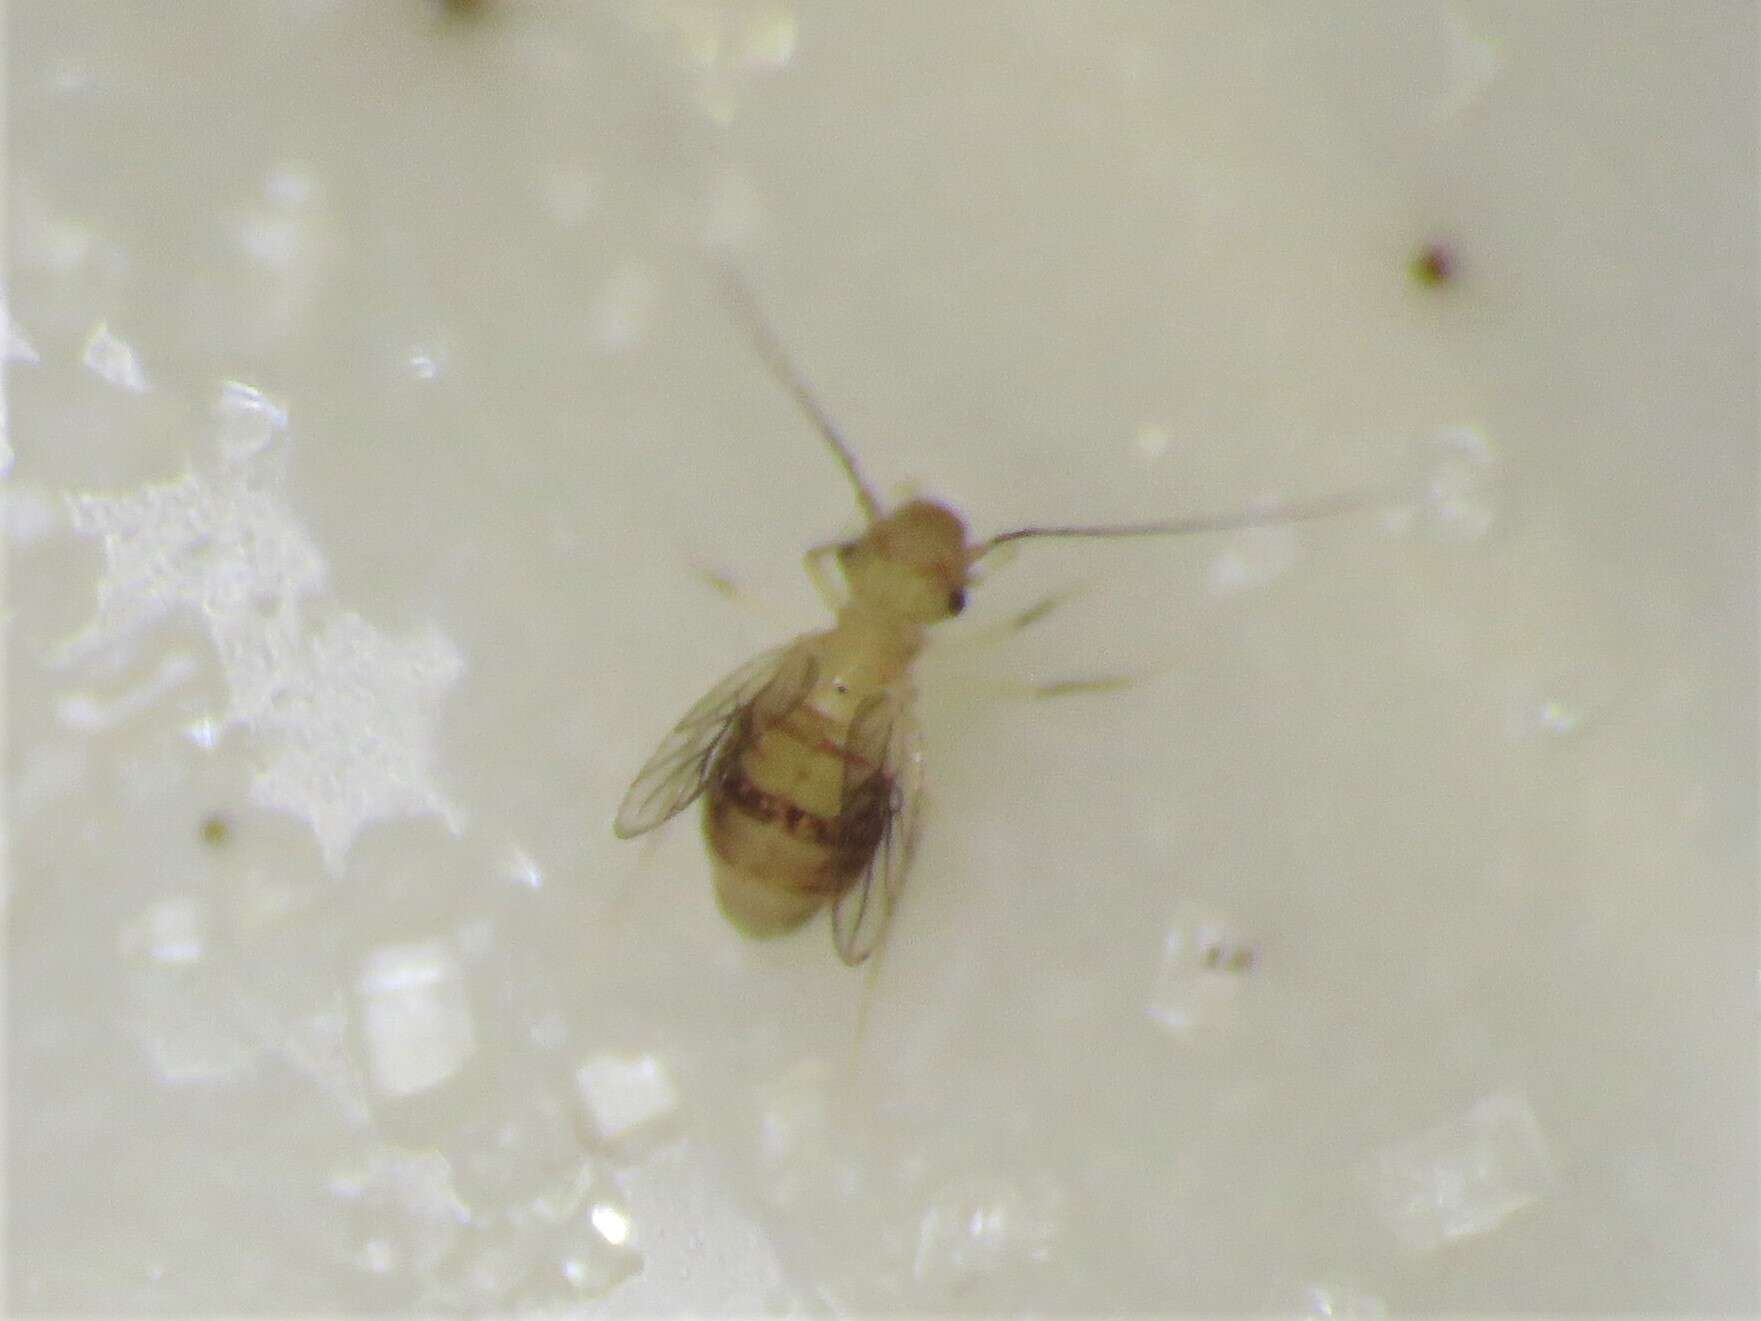 Image of Bark lice